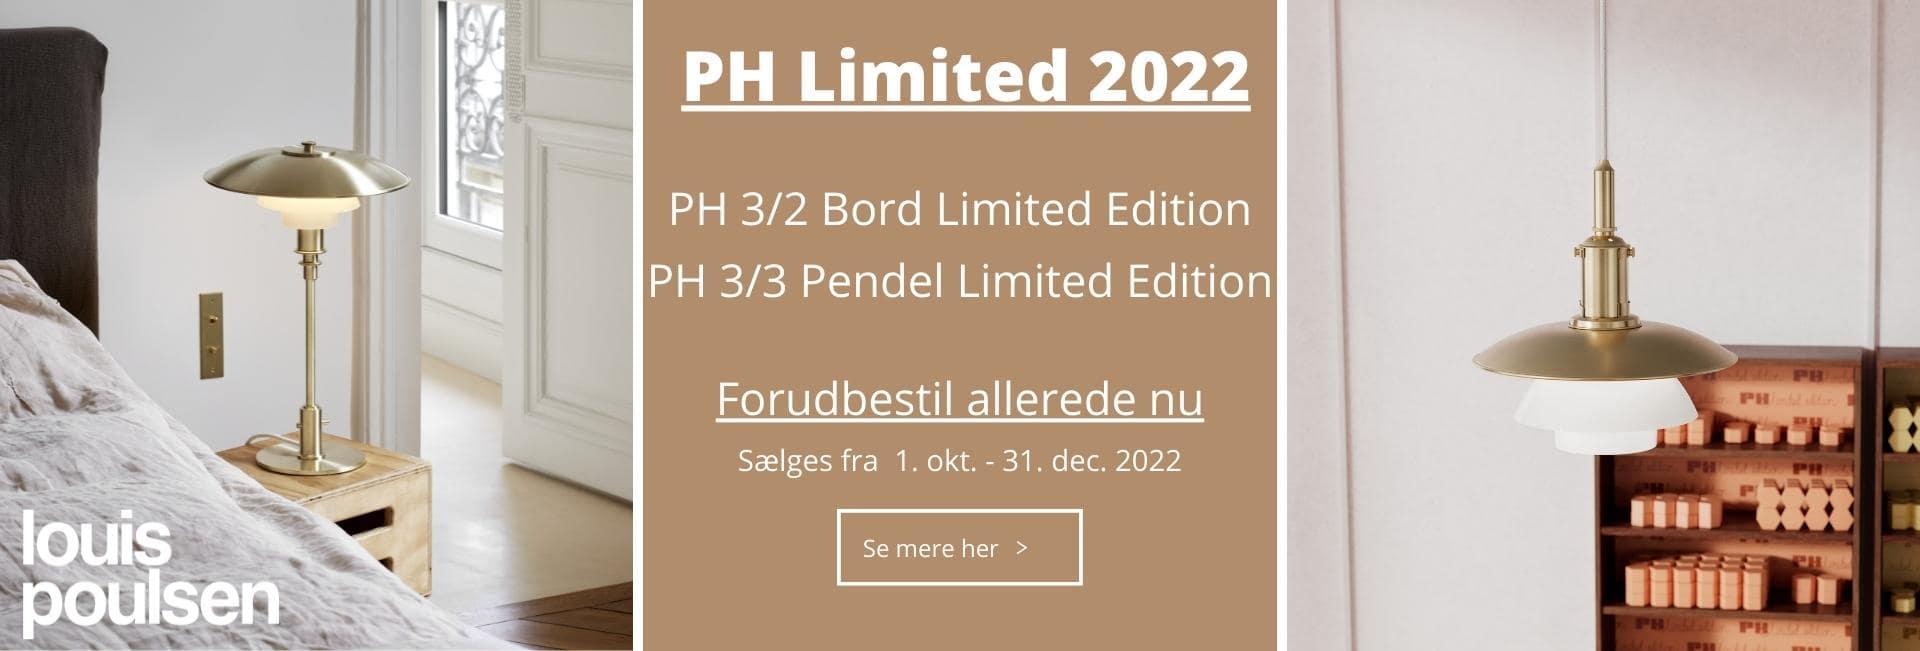 PH limited 2022